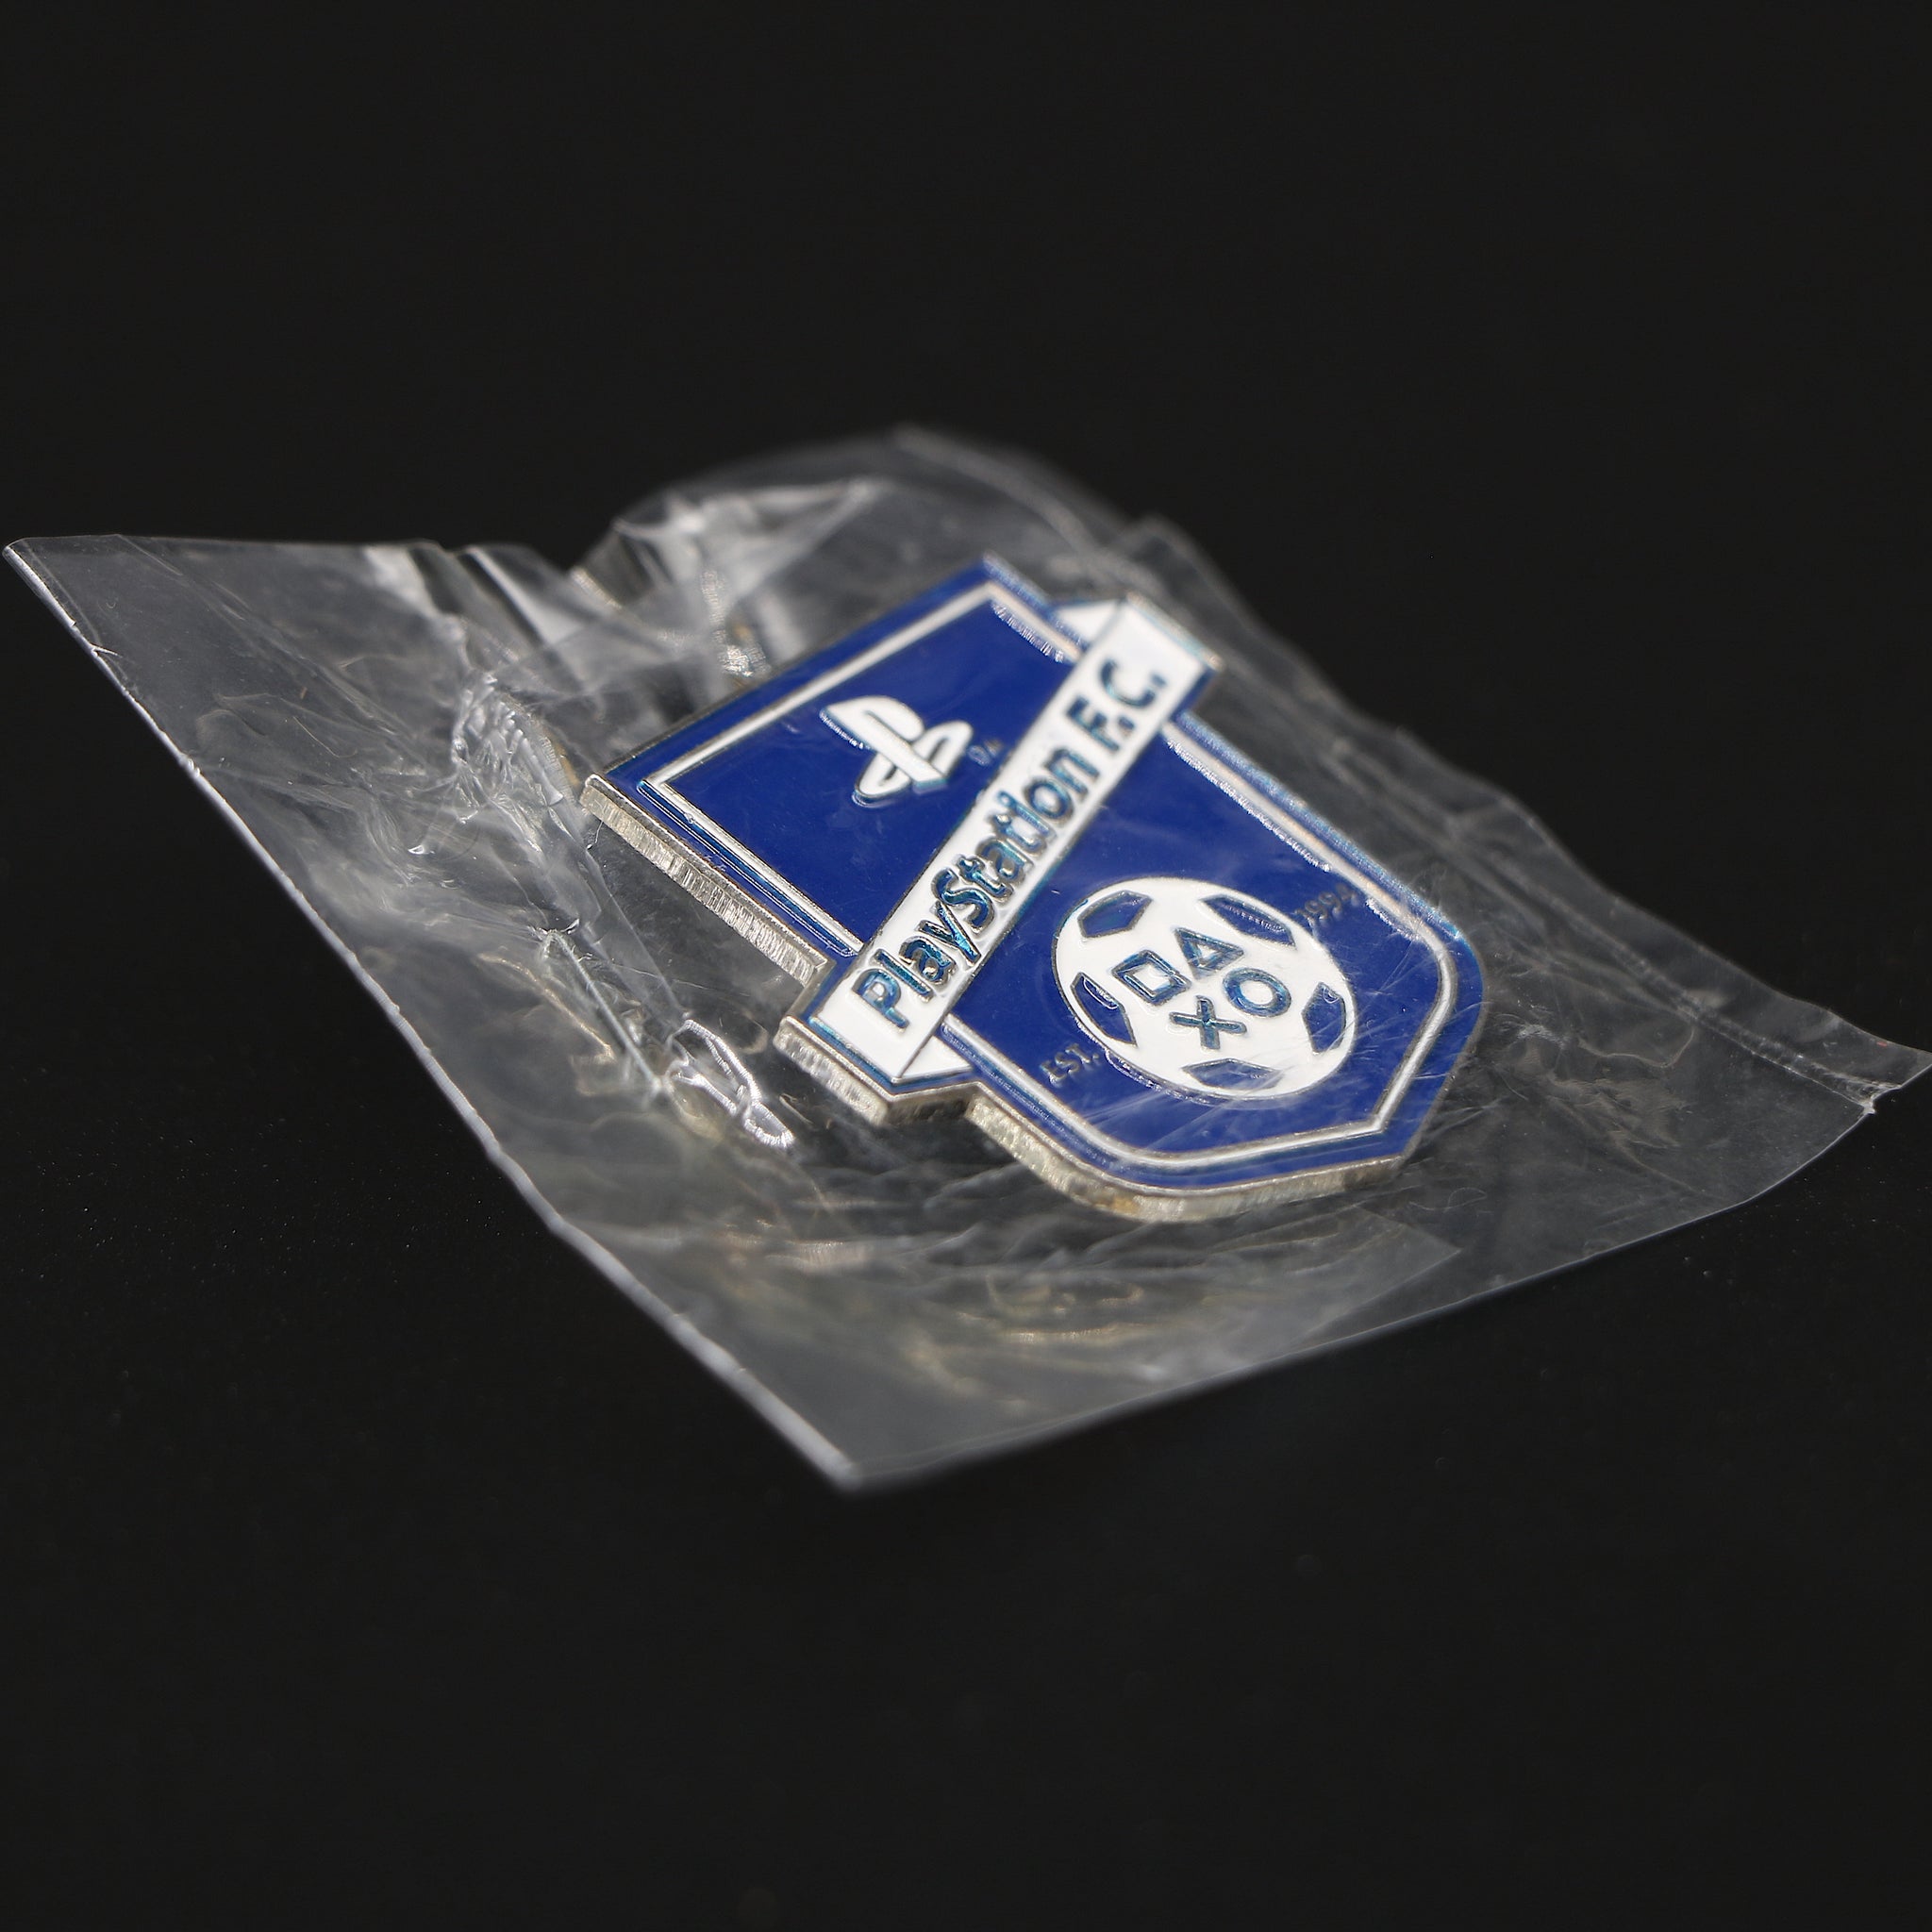 Official Sony Promo PlayStation F.C Football Club Enamel Metal Pin Badge